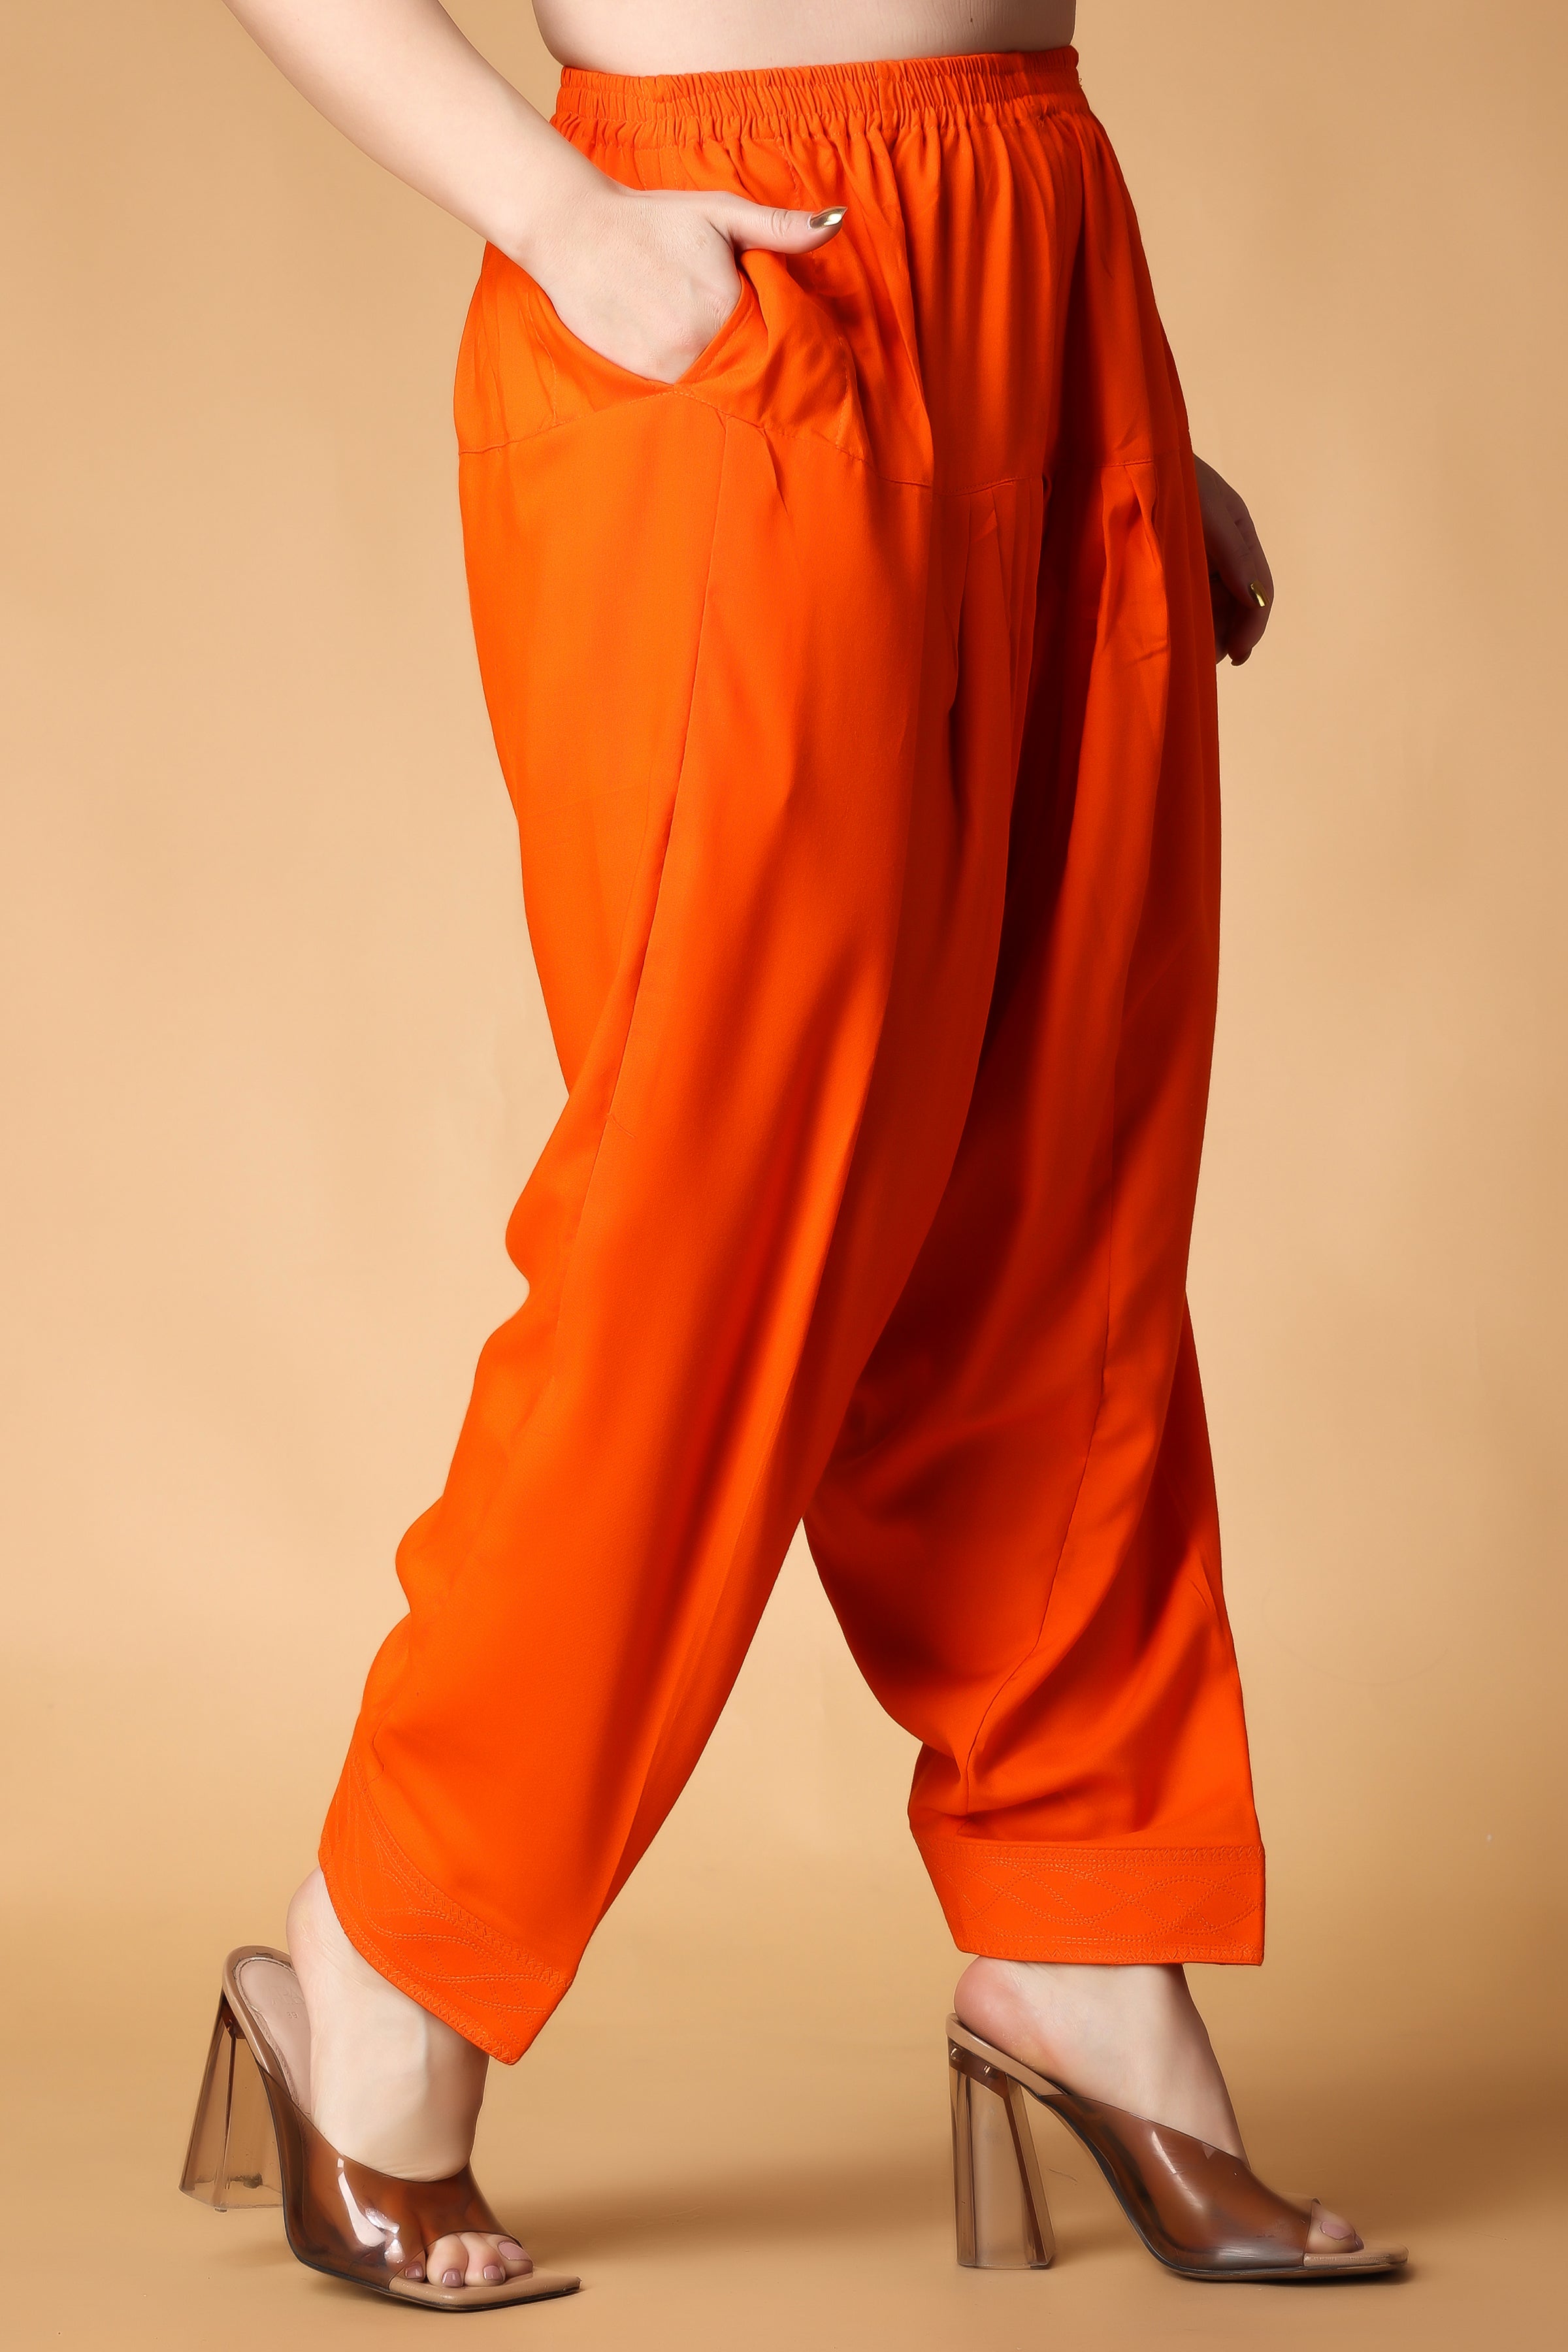 Indian Ethnic Wear Online Store | Fashion pants, Pantsuit, Fashion